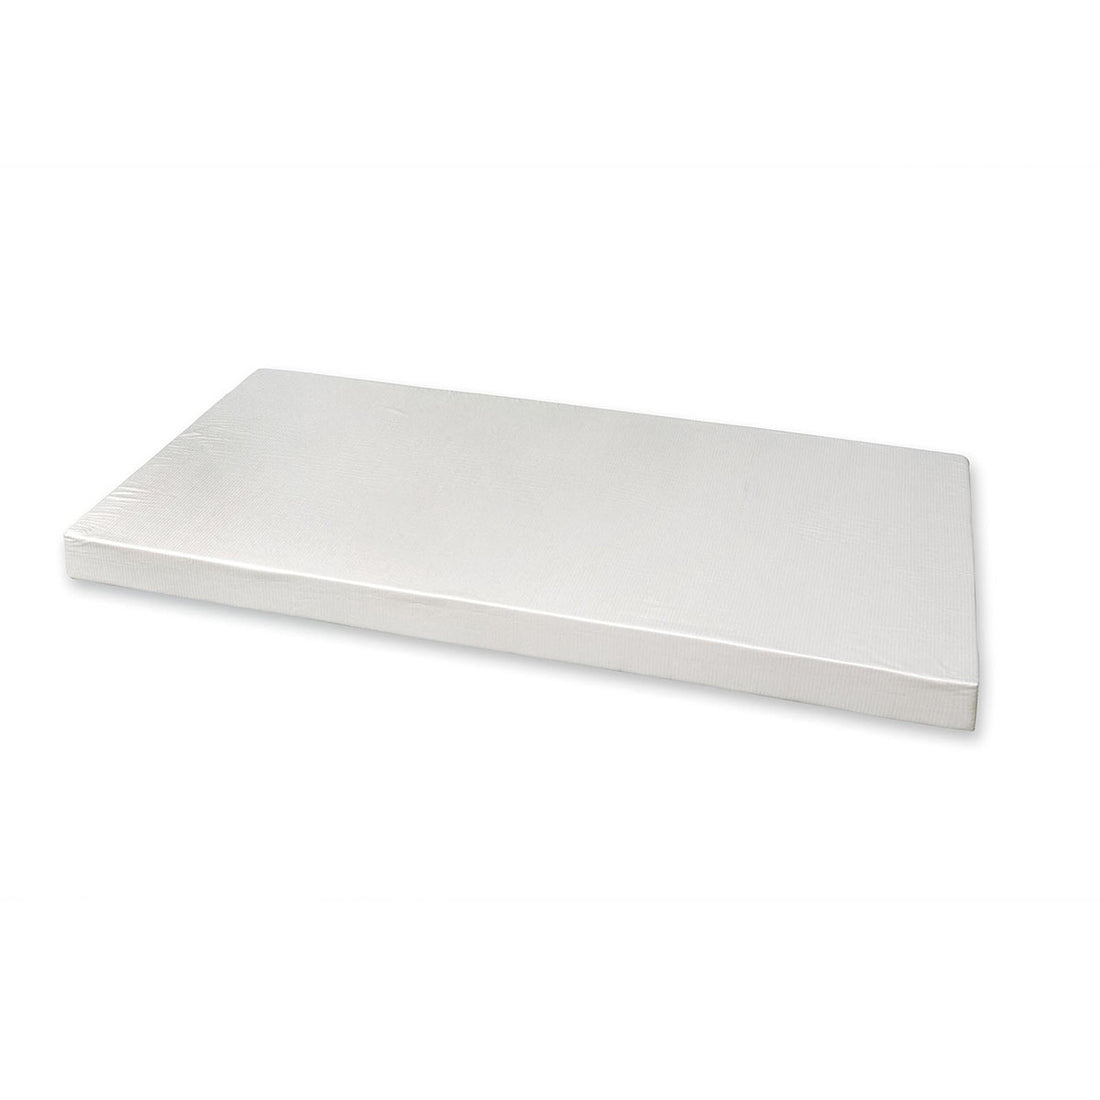 oliver-furniture-seaside-cold-foam-mattress-for-trundle-bed-90x176x10cm- (1)